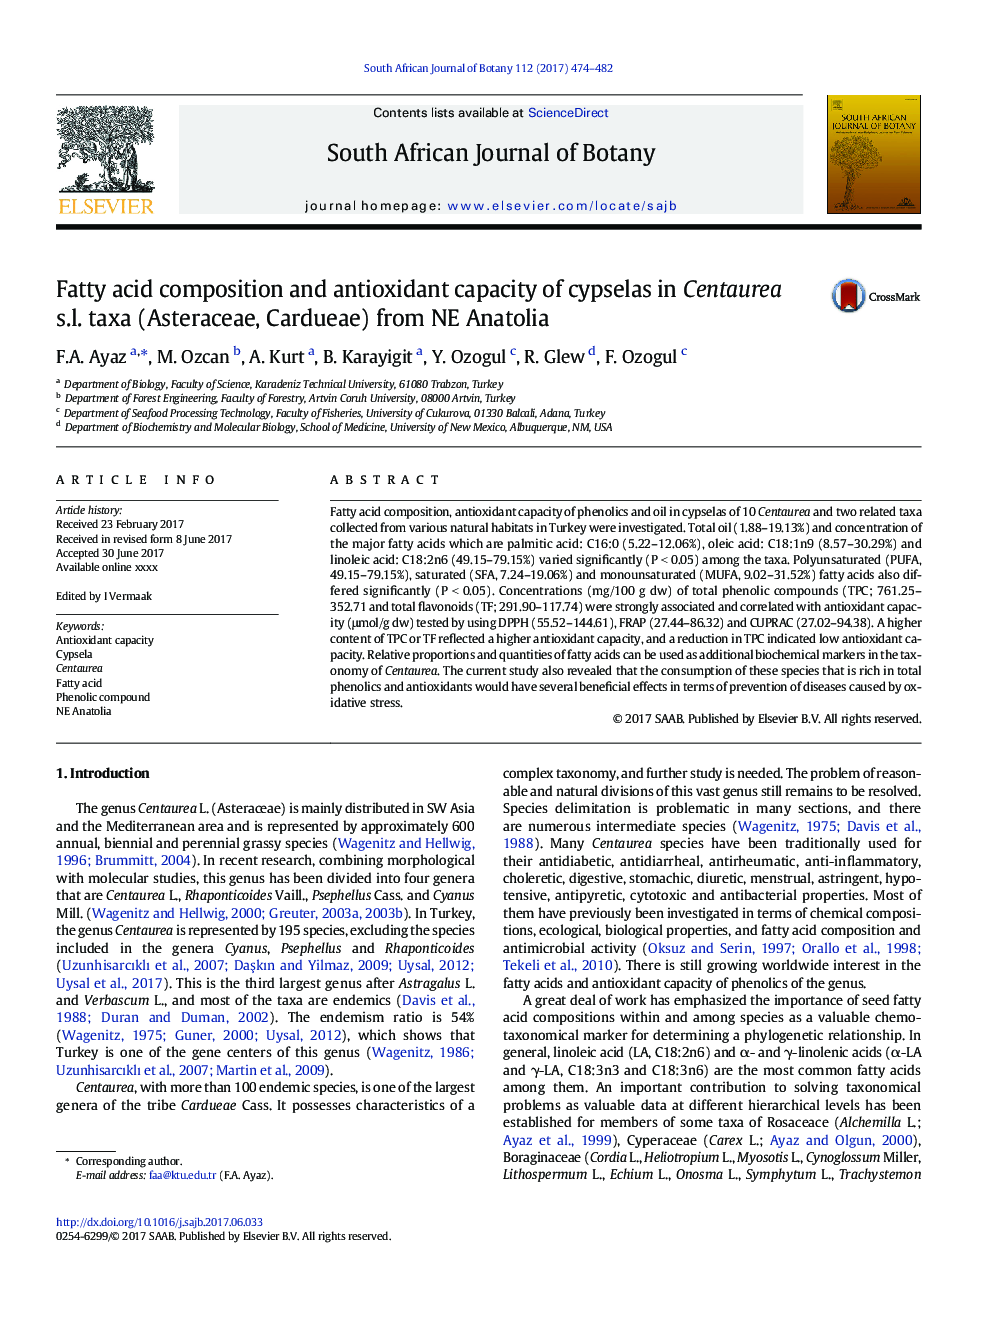 Fatty acid composition and antioxidant capacity of cypselas in Centaurea s.l. taxa (Asteraceae, Cardueae) from NE Anatolia